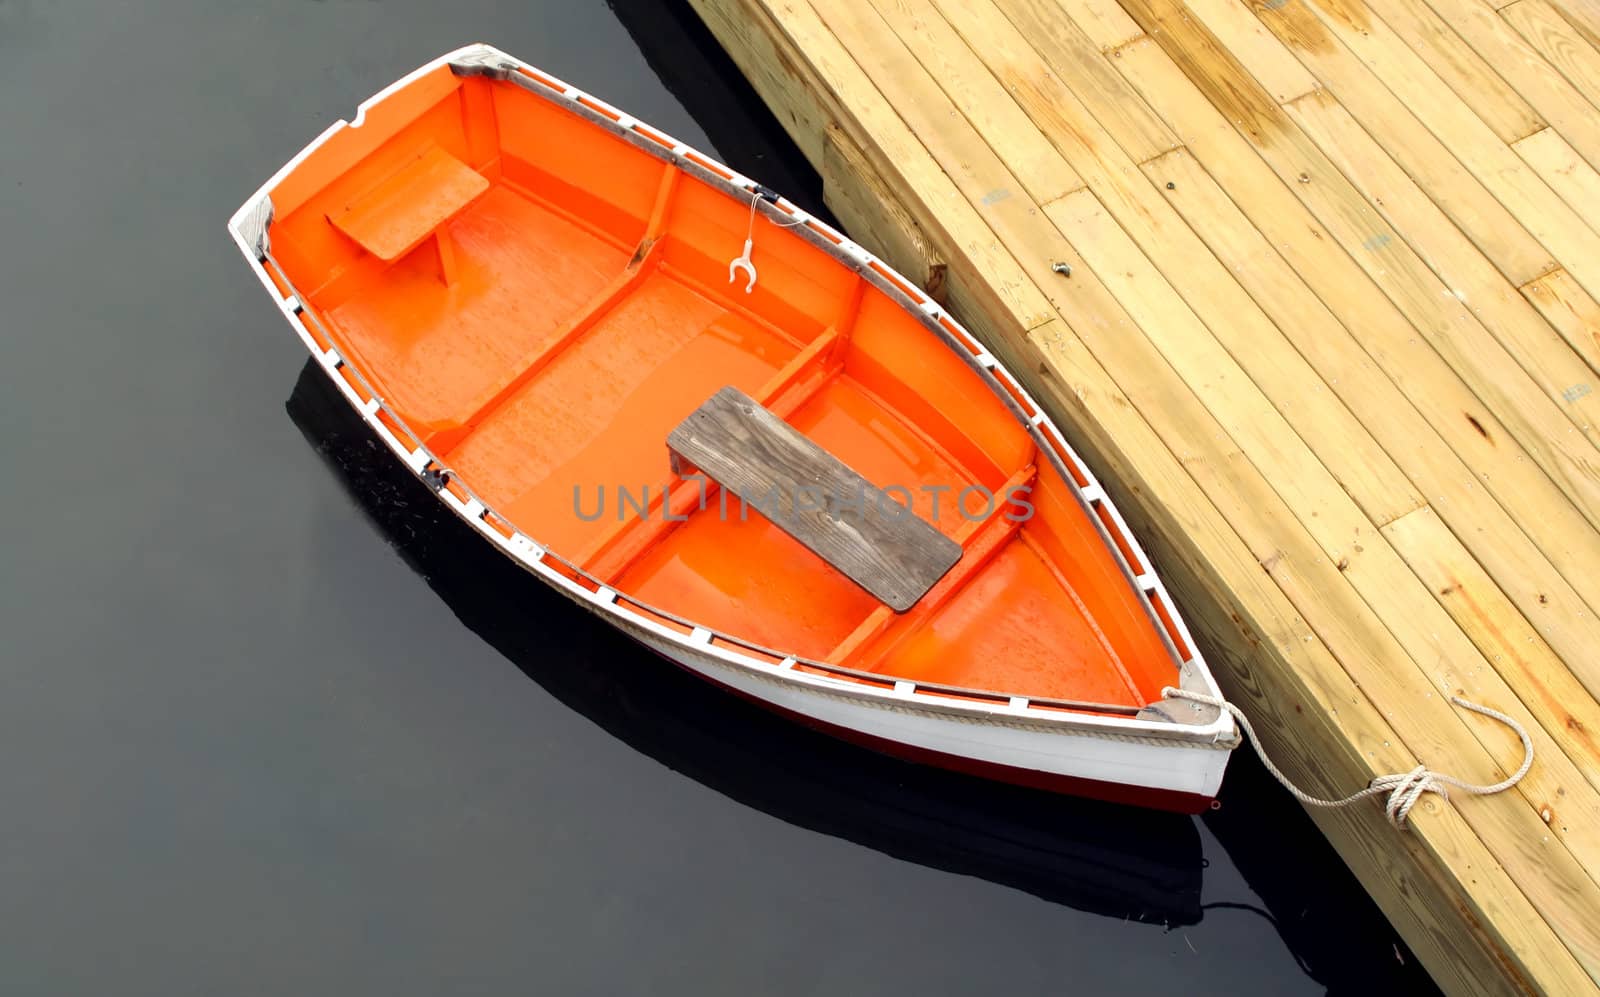 Orange Boat by thephotoguy